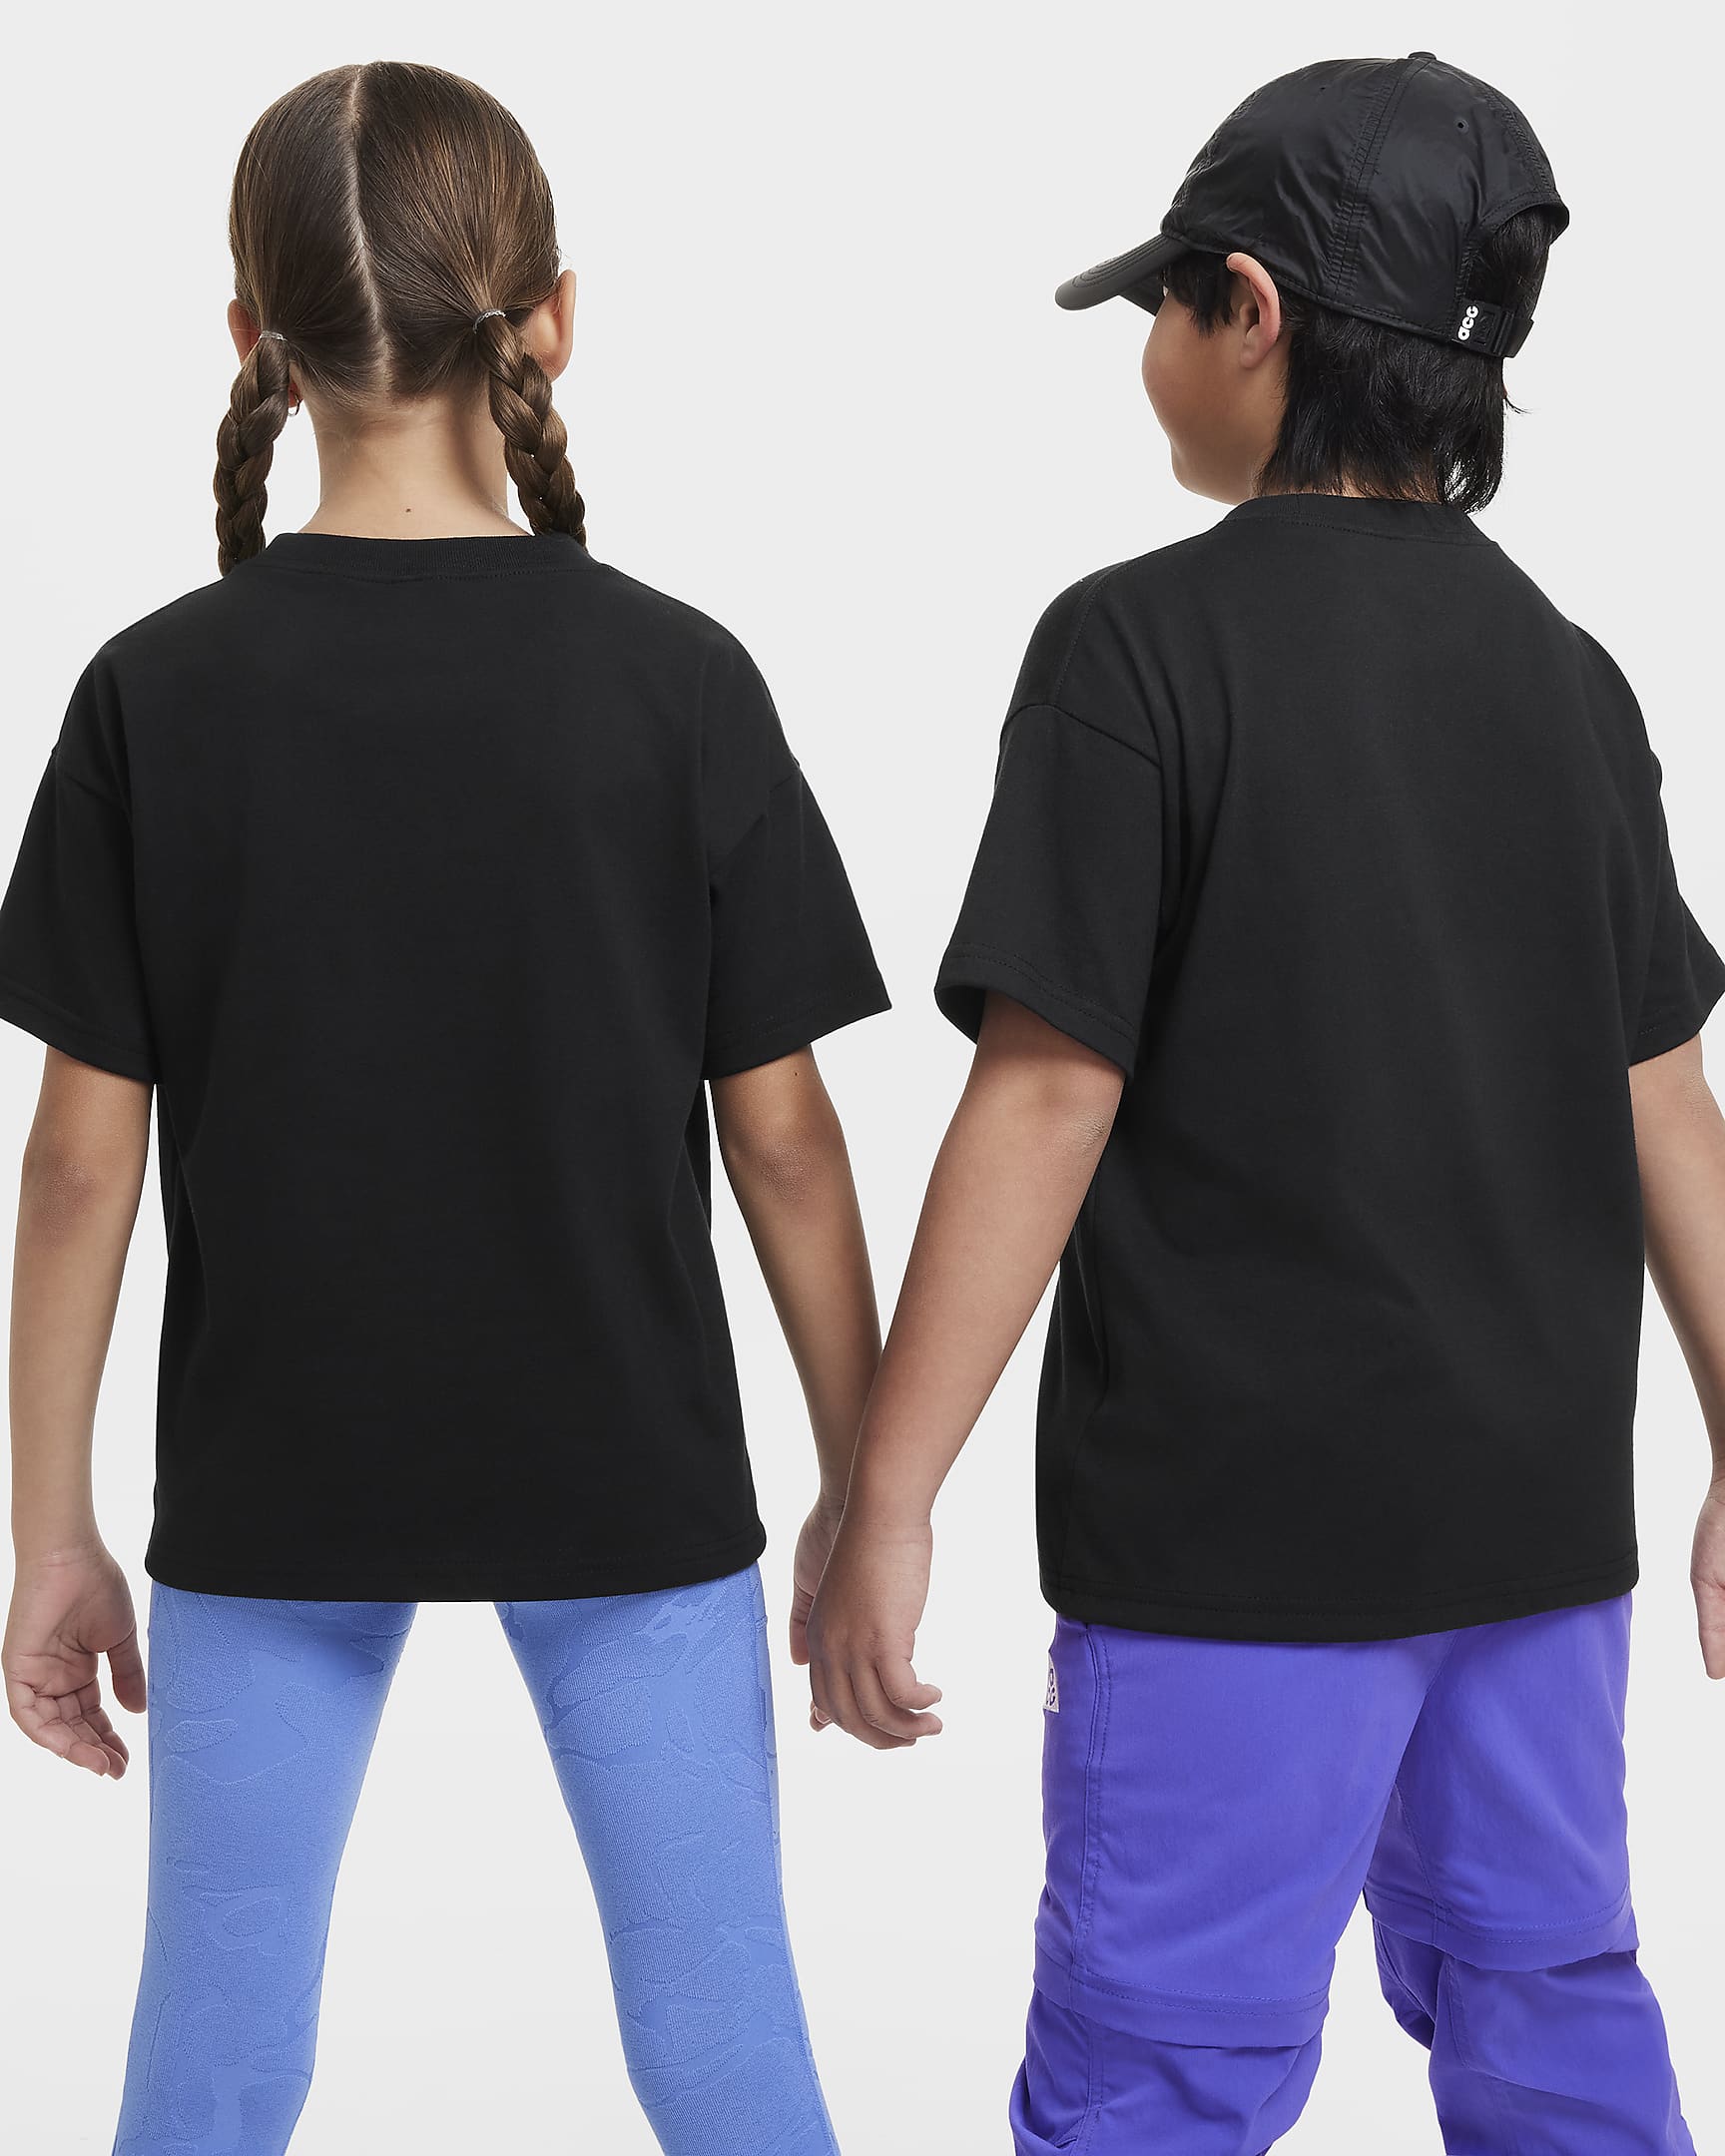 Nike ACG Older Kids' T-Shirt - Black